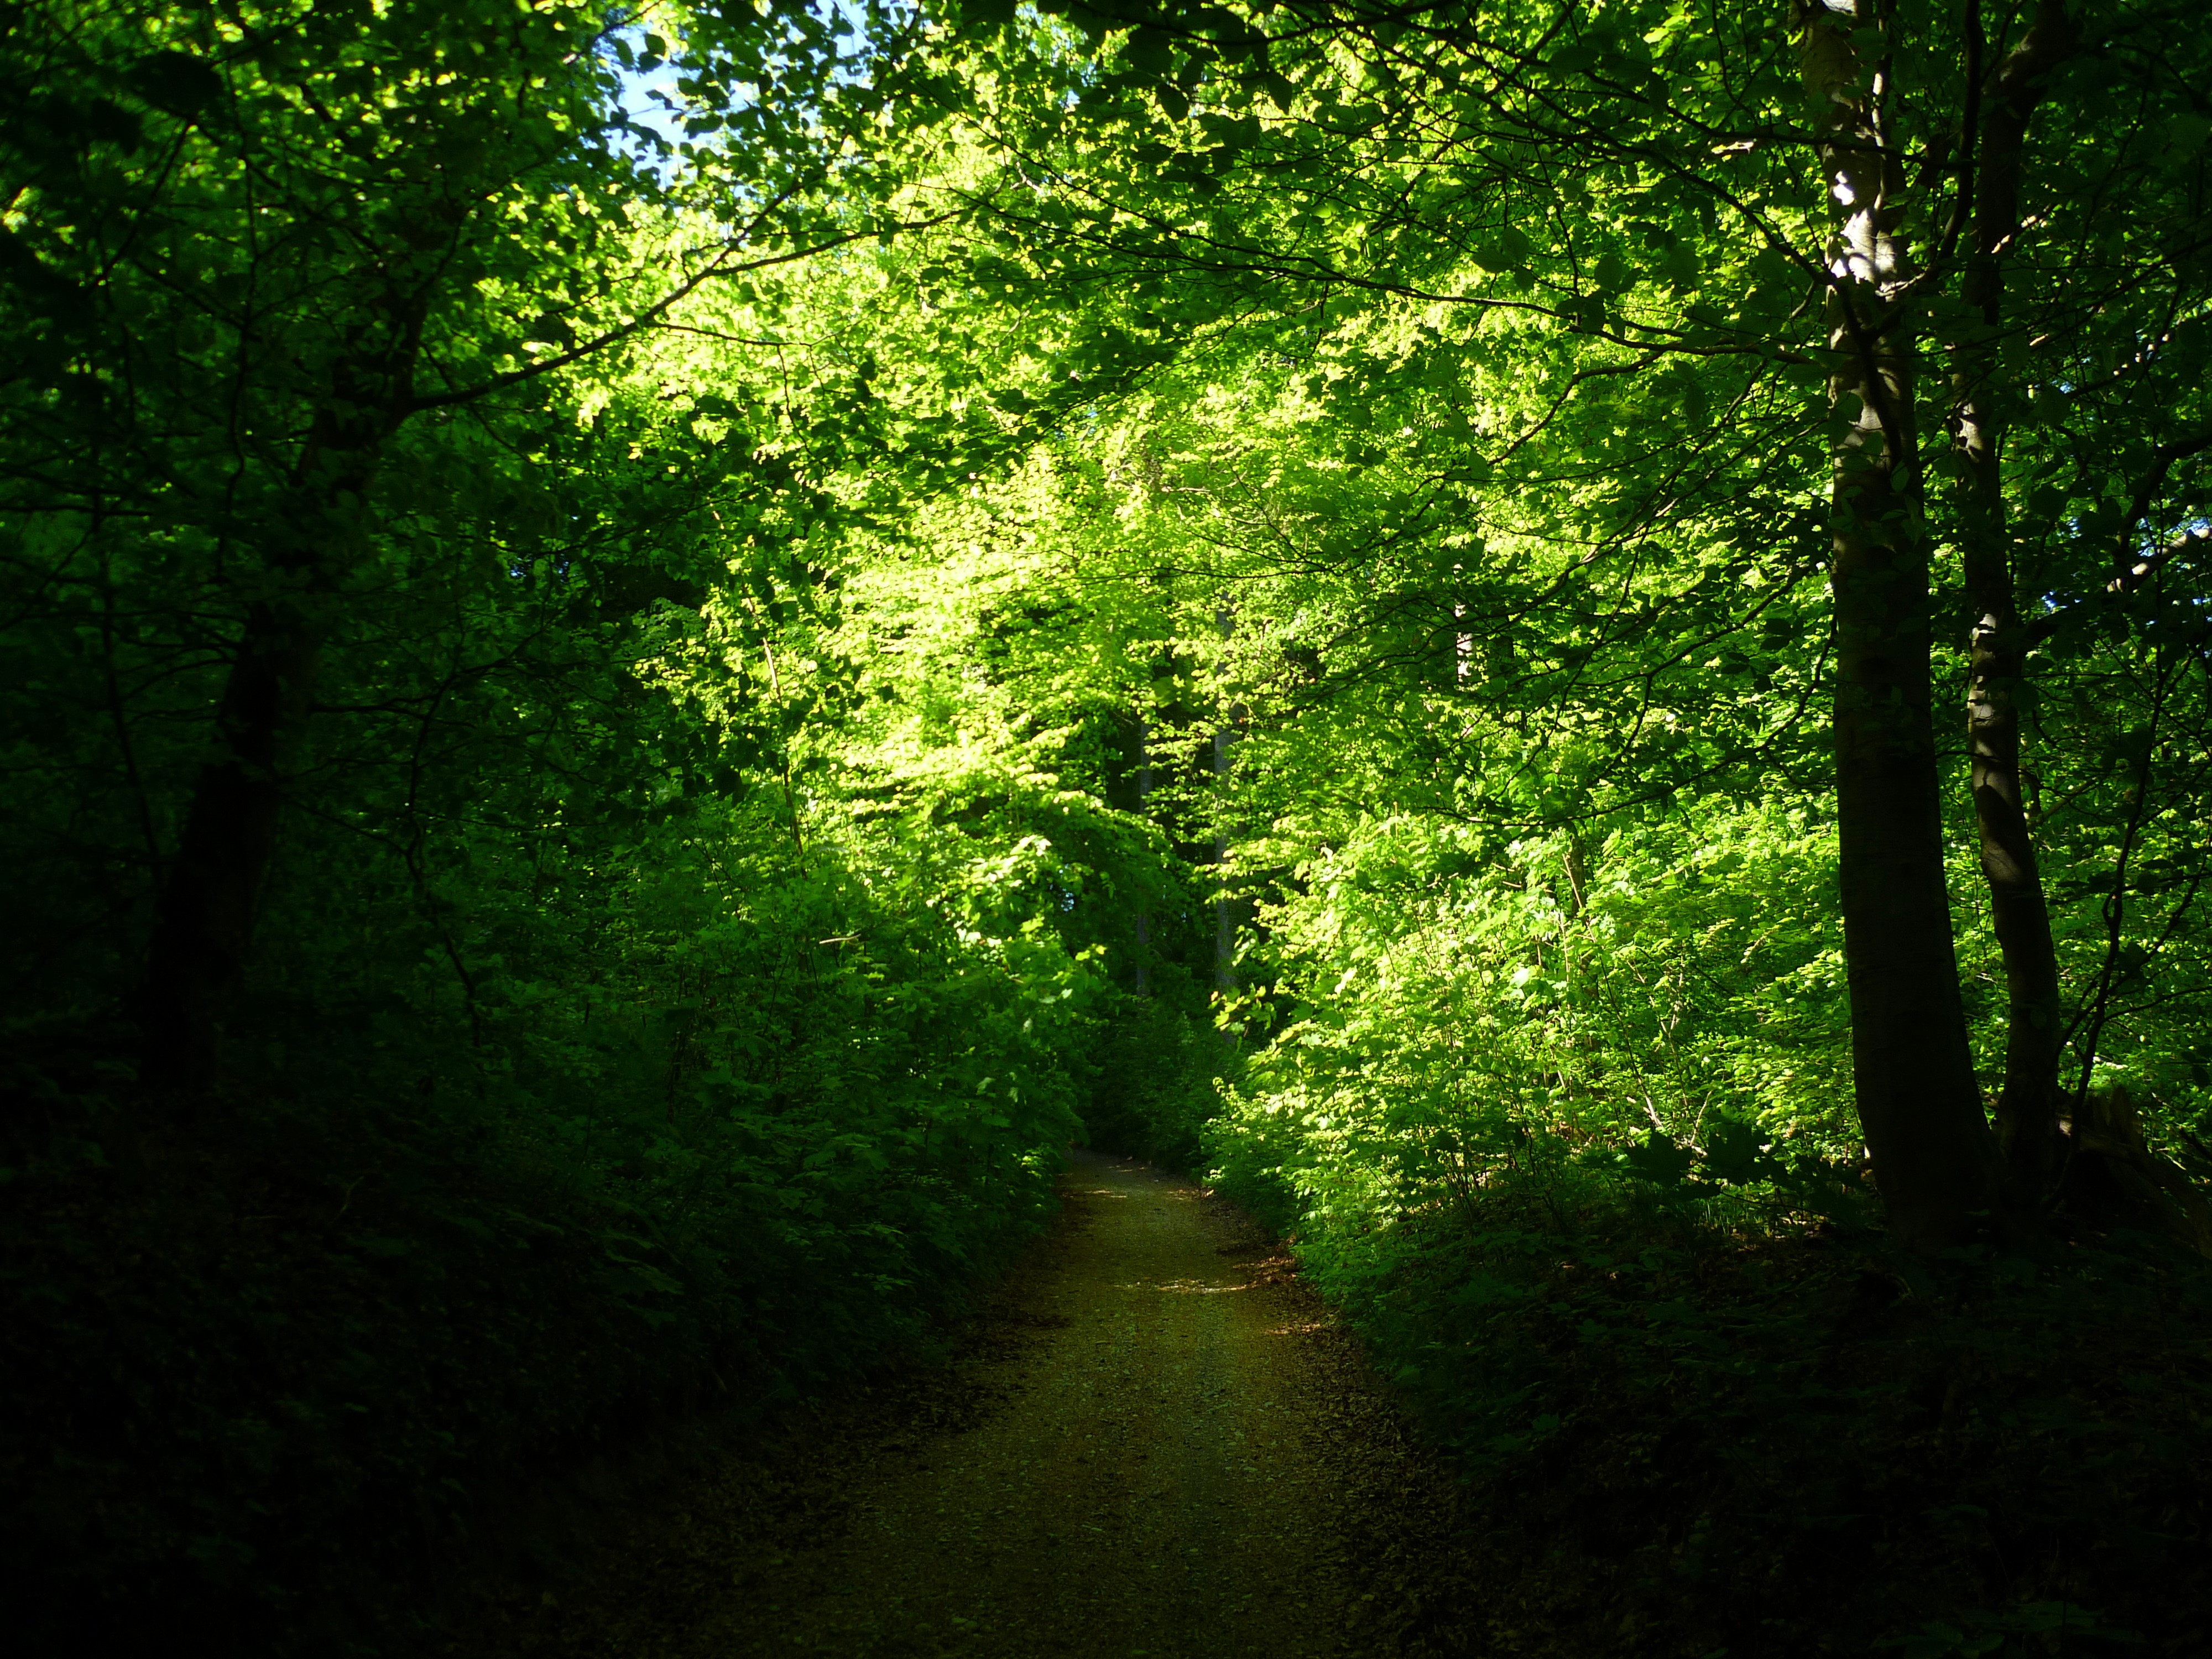 General 4000x3000 landscape light green forest summer green foliage path